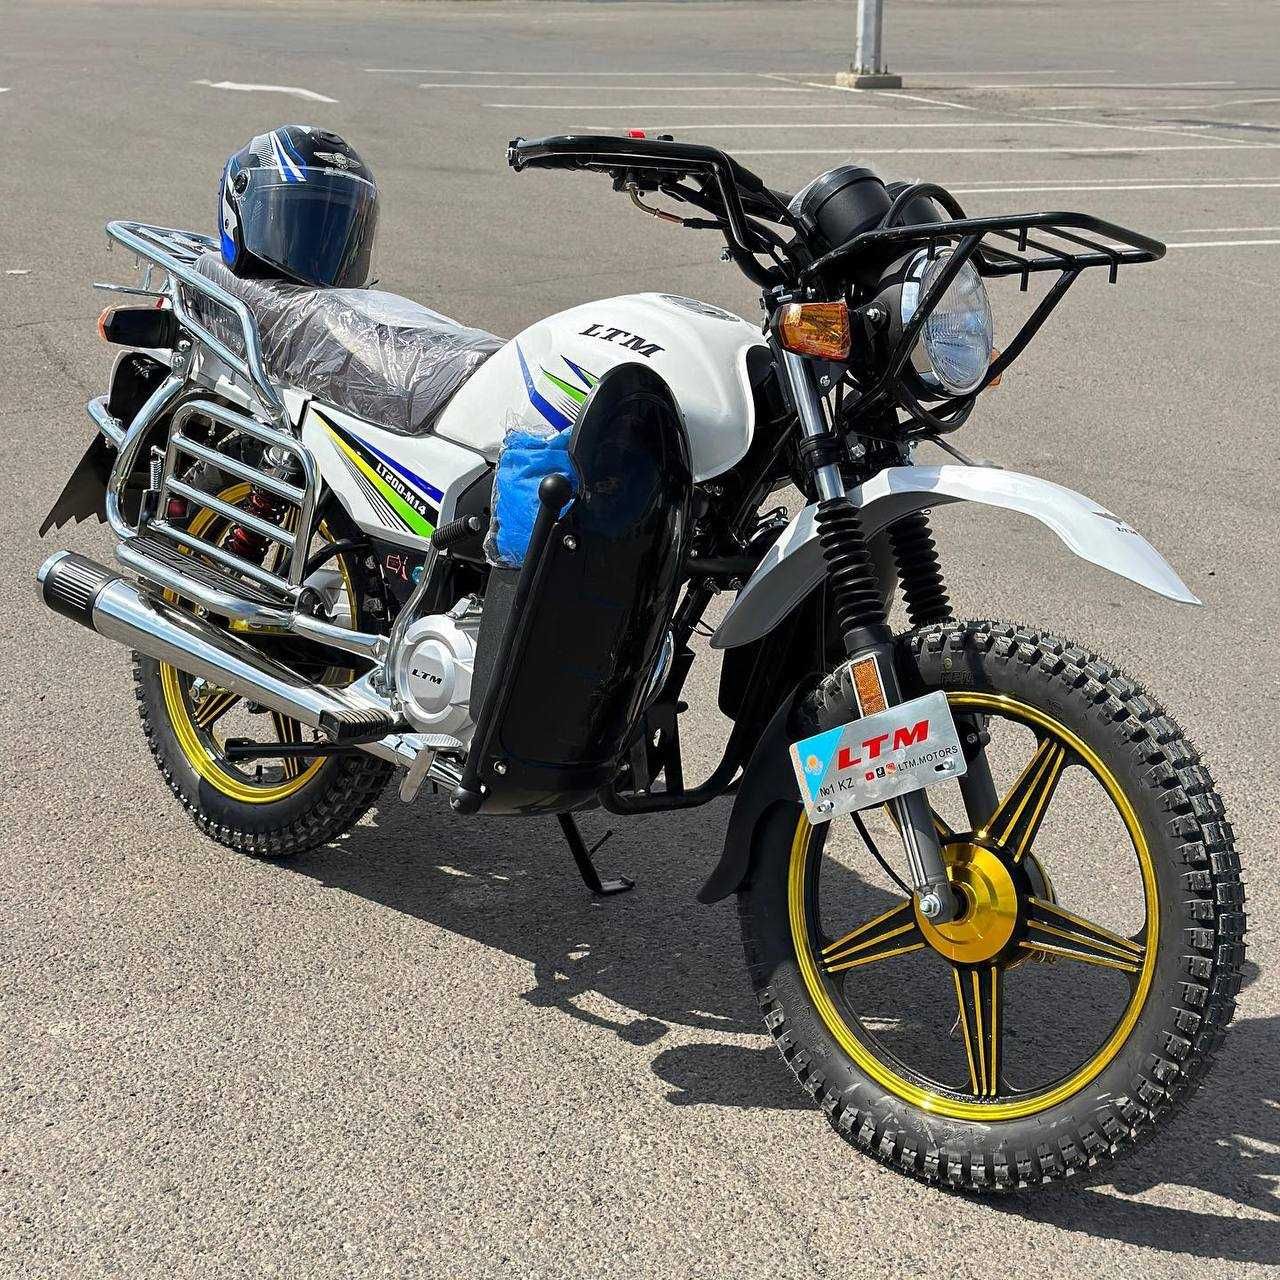 Мотоцикл LTM LT200-B14/М14 с документами, Атырау